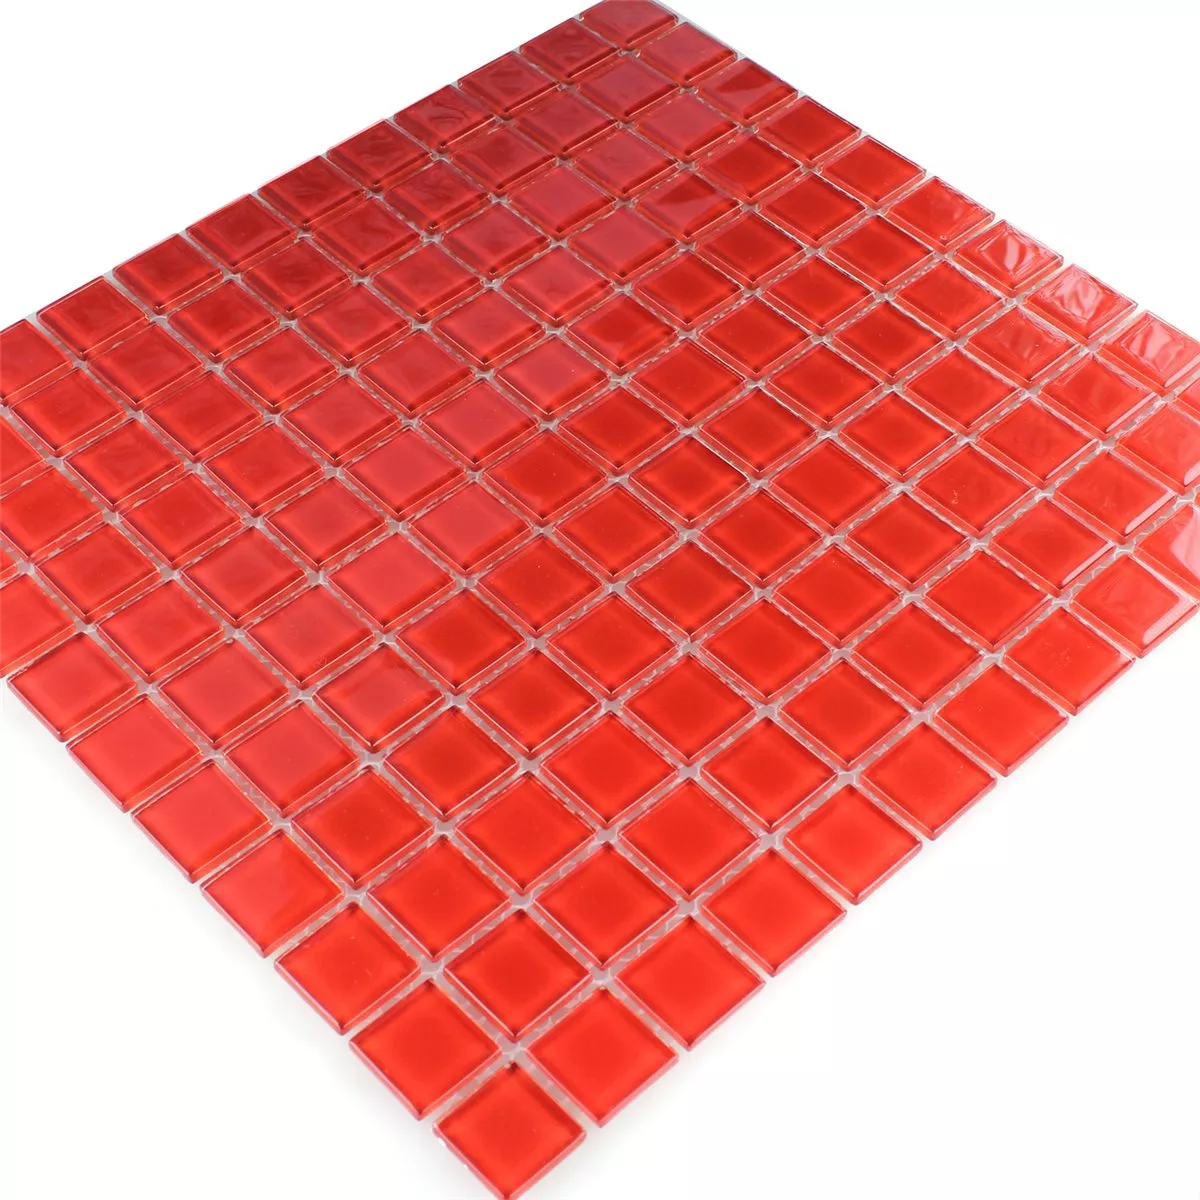 Crystal Mosaic Tiles Glass Red Uni 25x25x4mm